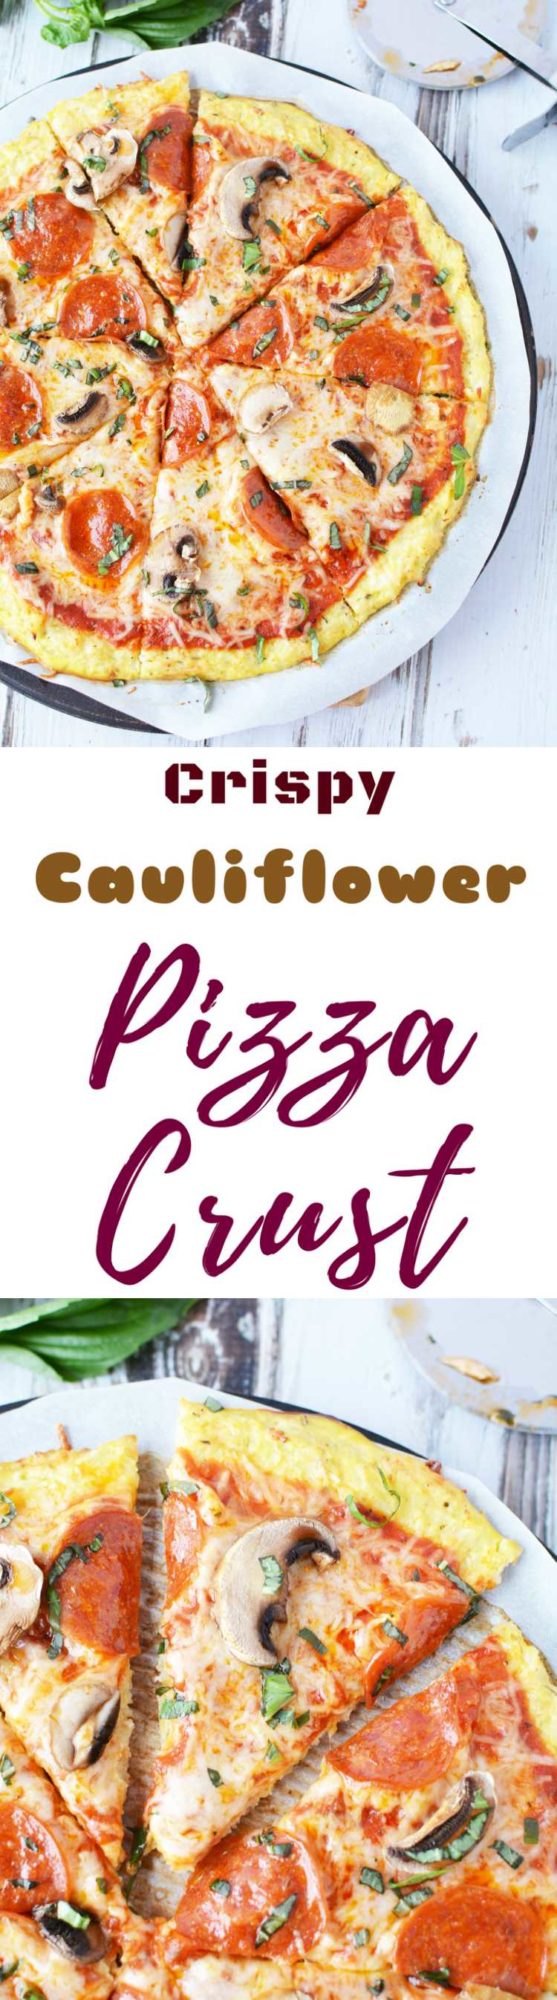 Crispy cauliflower pizza crust